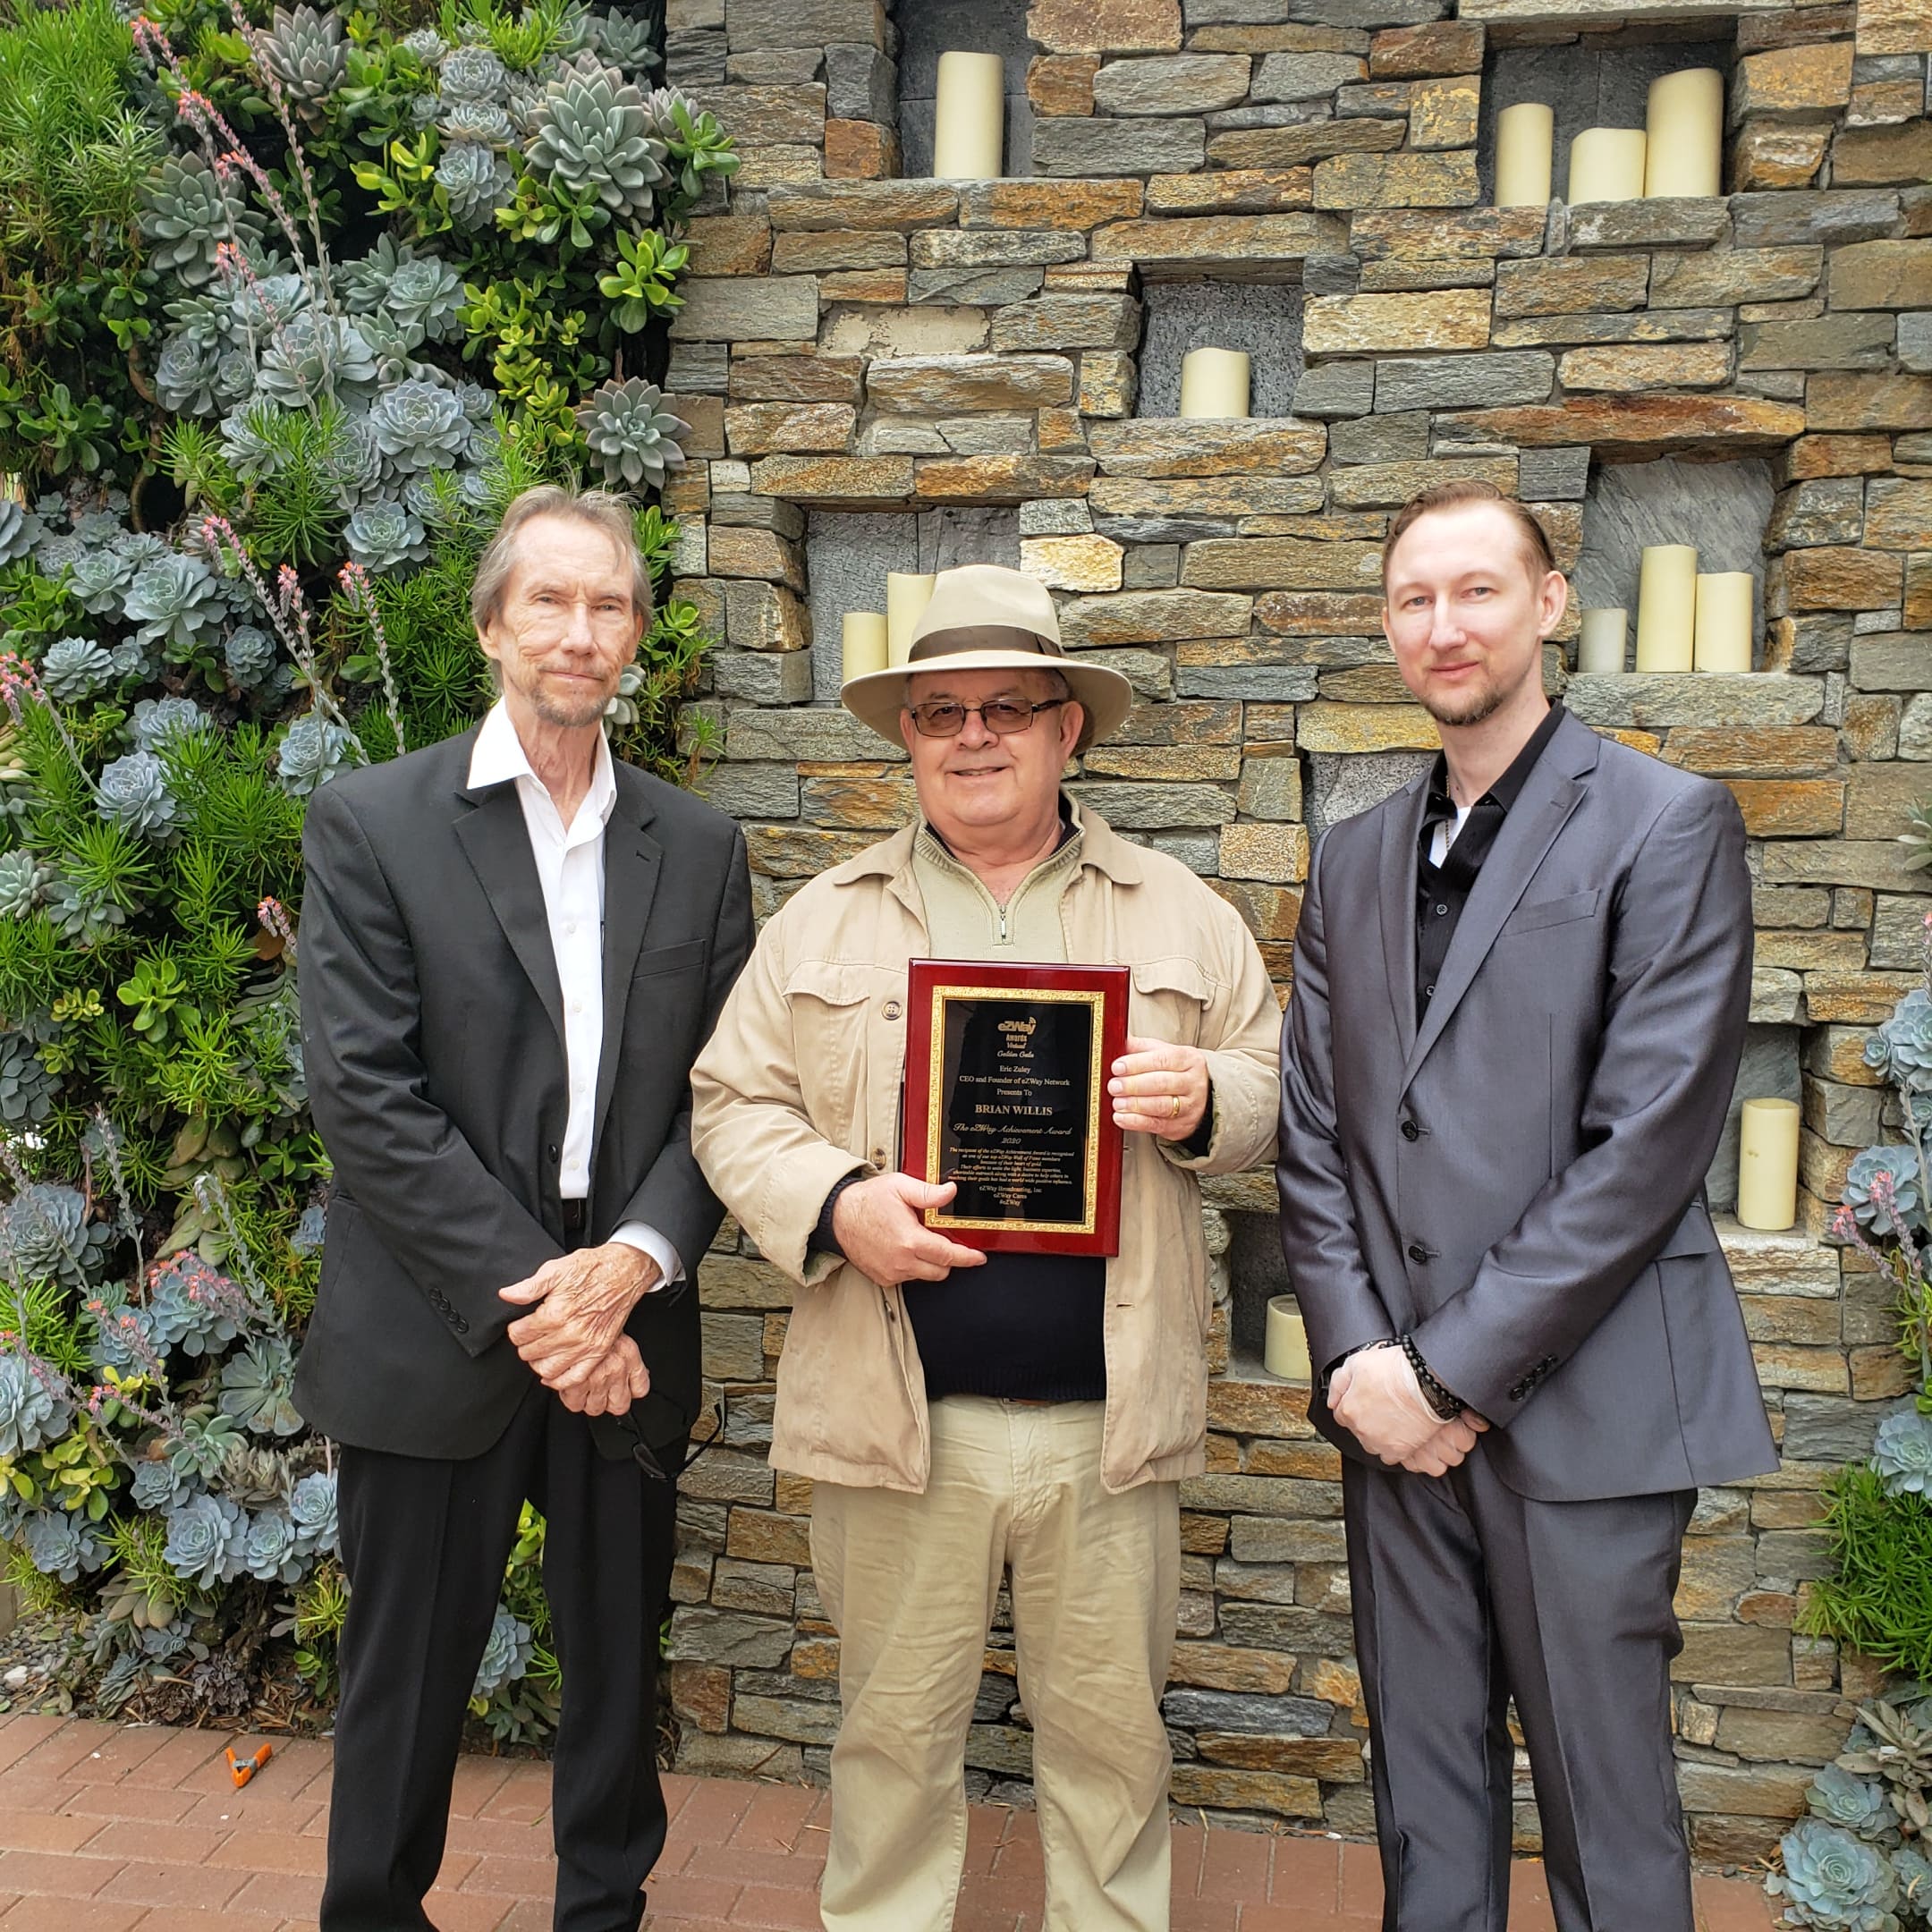 Brian Willis Super EWOF Influencer receives eZWay Achievement Award presented by Eric Zuley